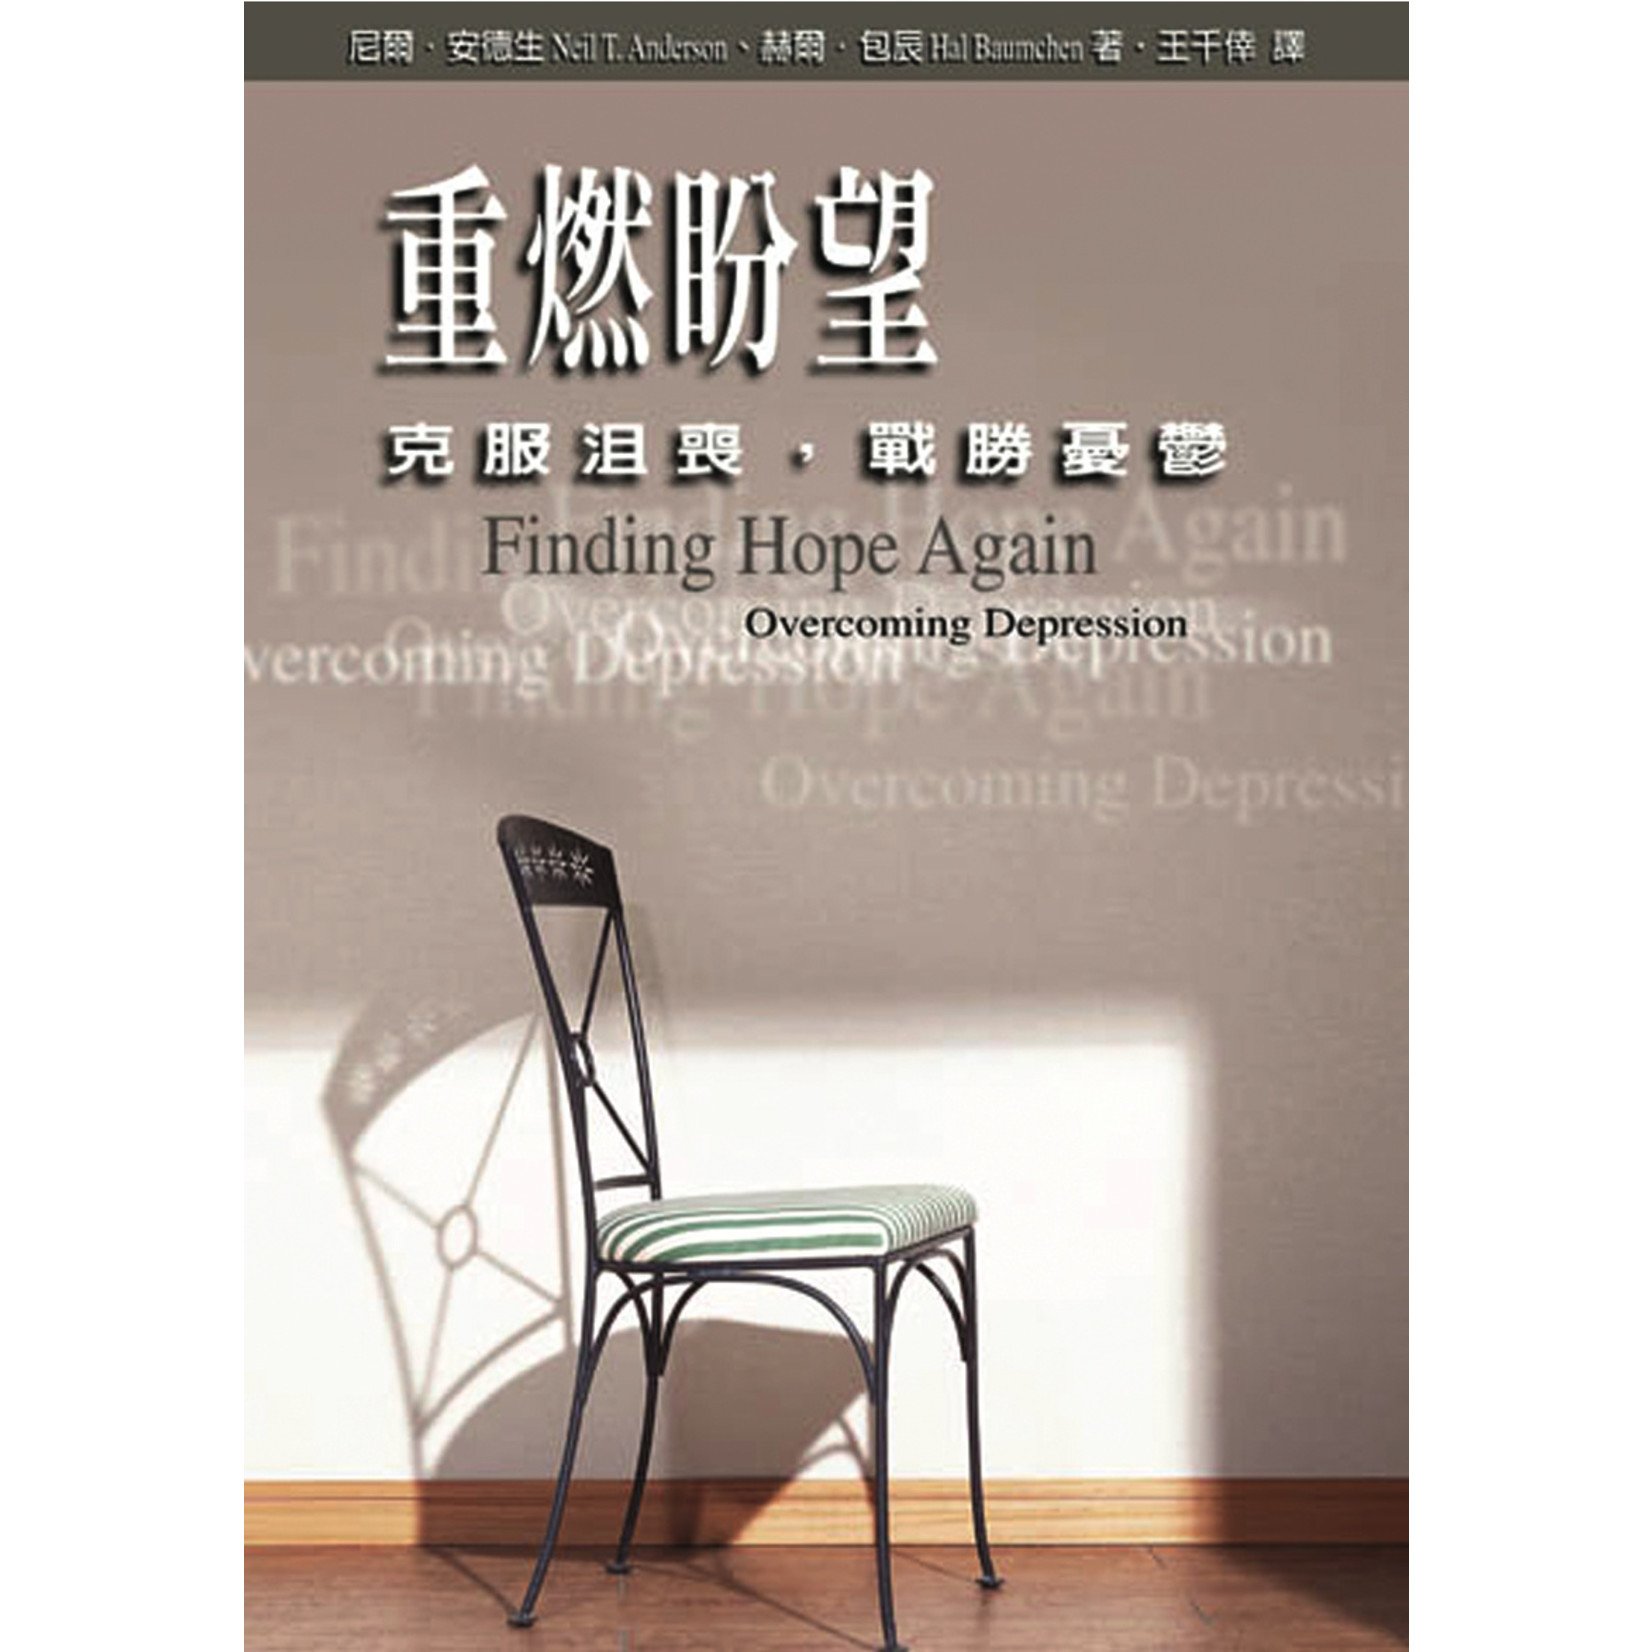 中國學園傳道會 Taiwan Campus Crusade for Christ 重燃盼望：克服沮喪，戰勝憂鬱 | Finding Hope Again